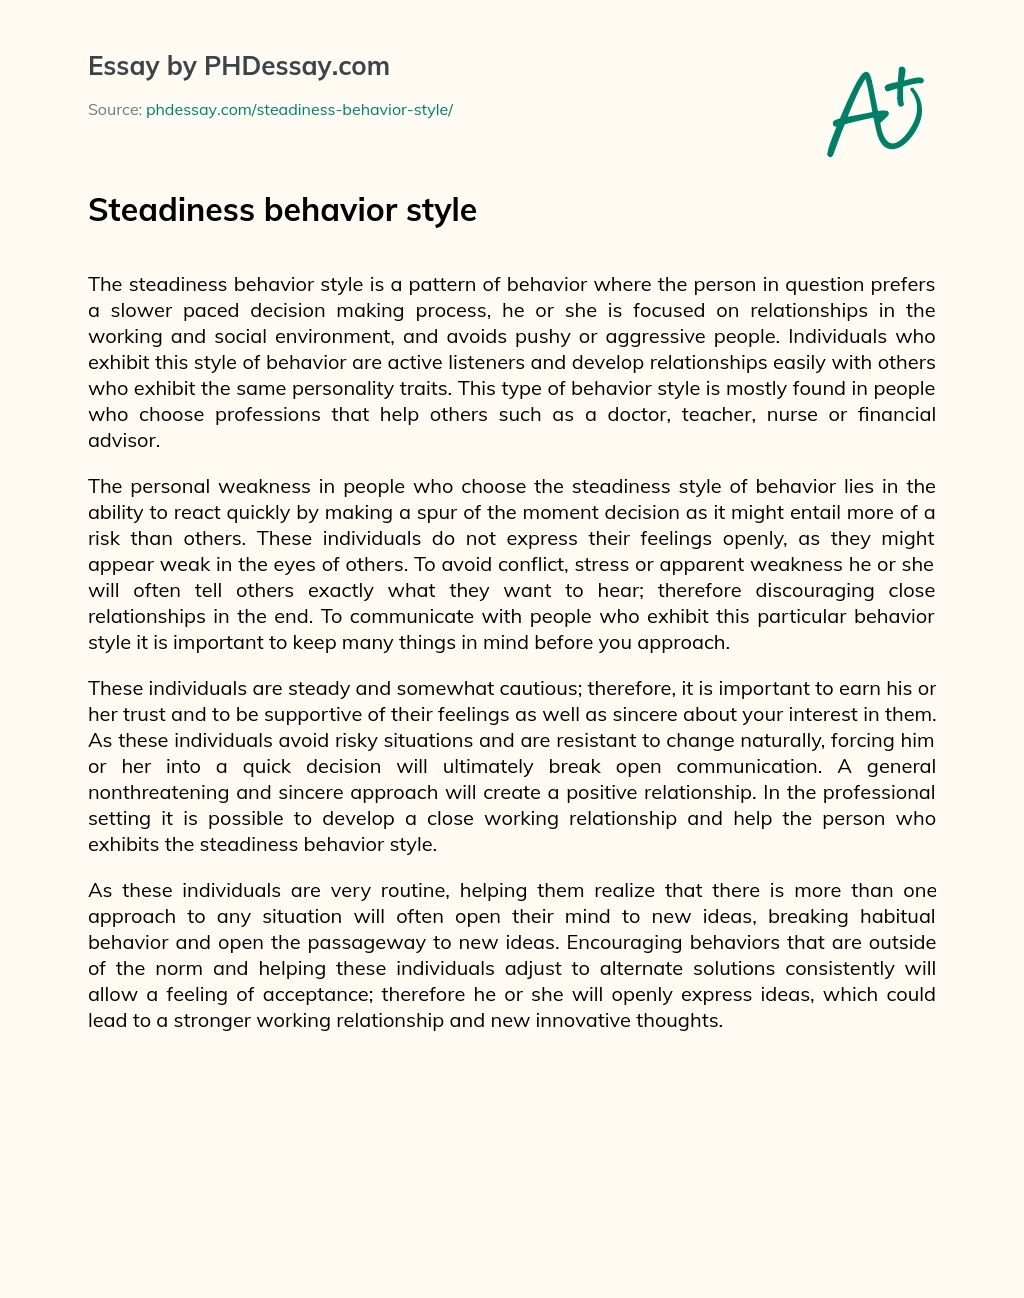 Steadiness behavior style essay